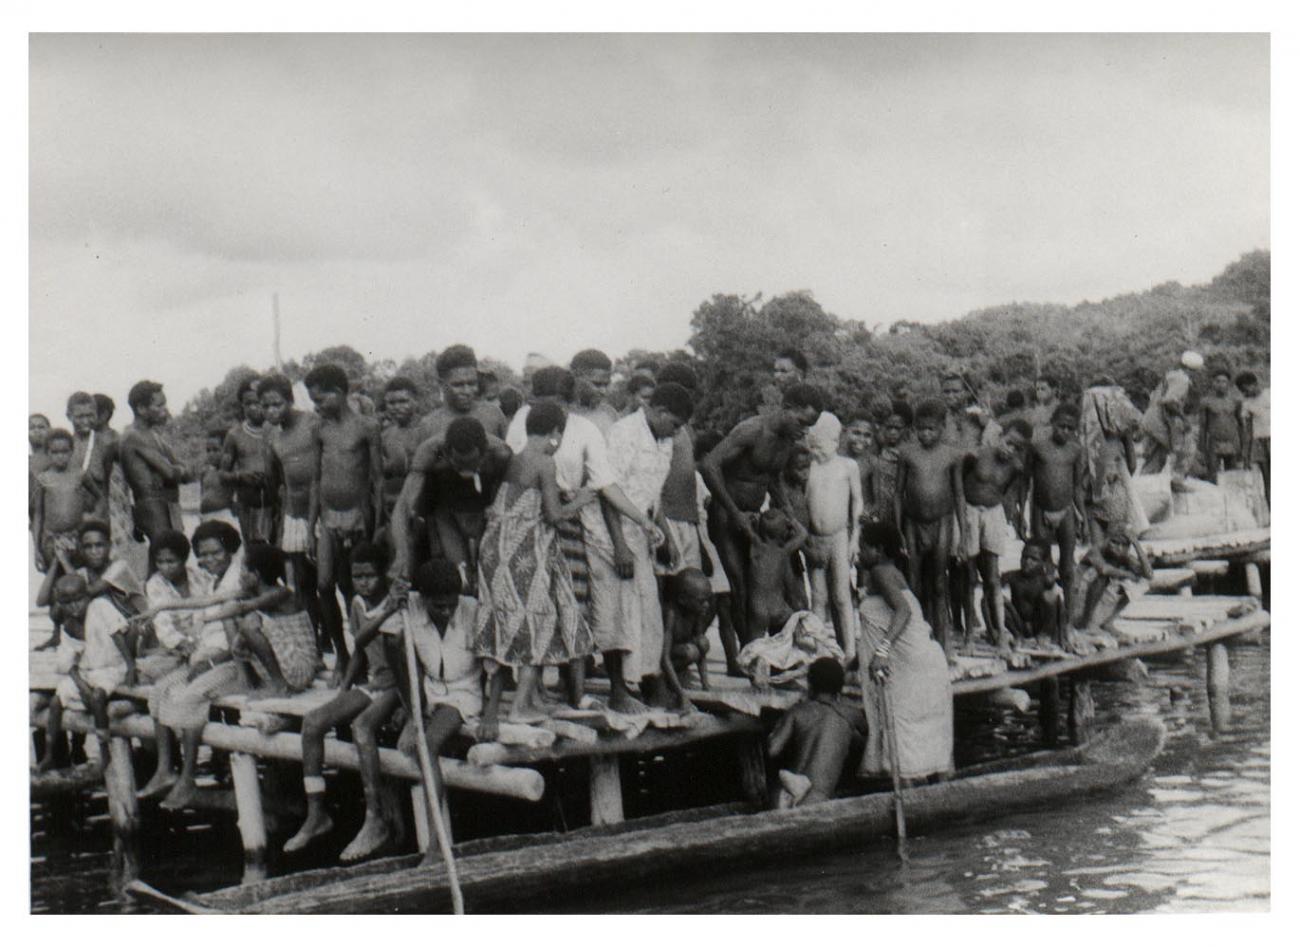 BD/54/18 - 
Kampong Manokwari, canoe at pier
